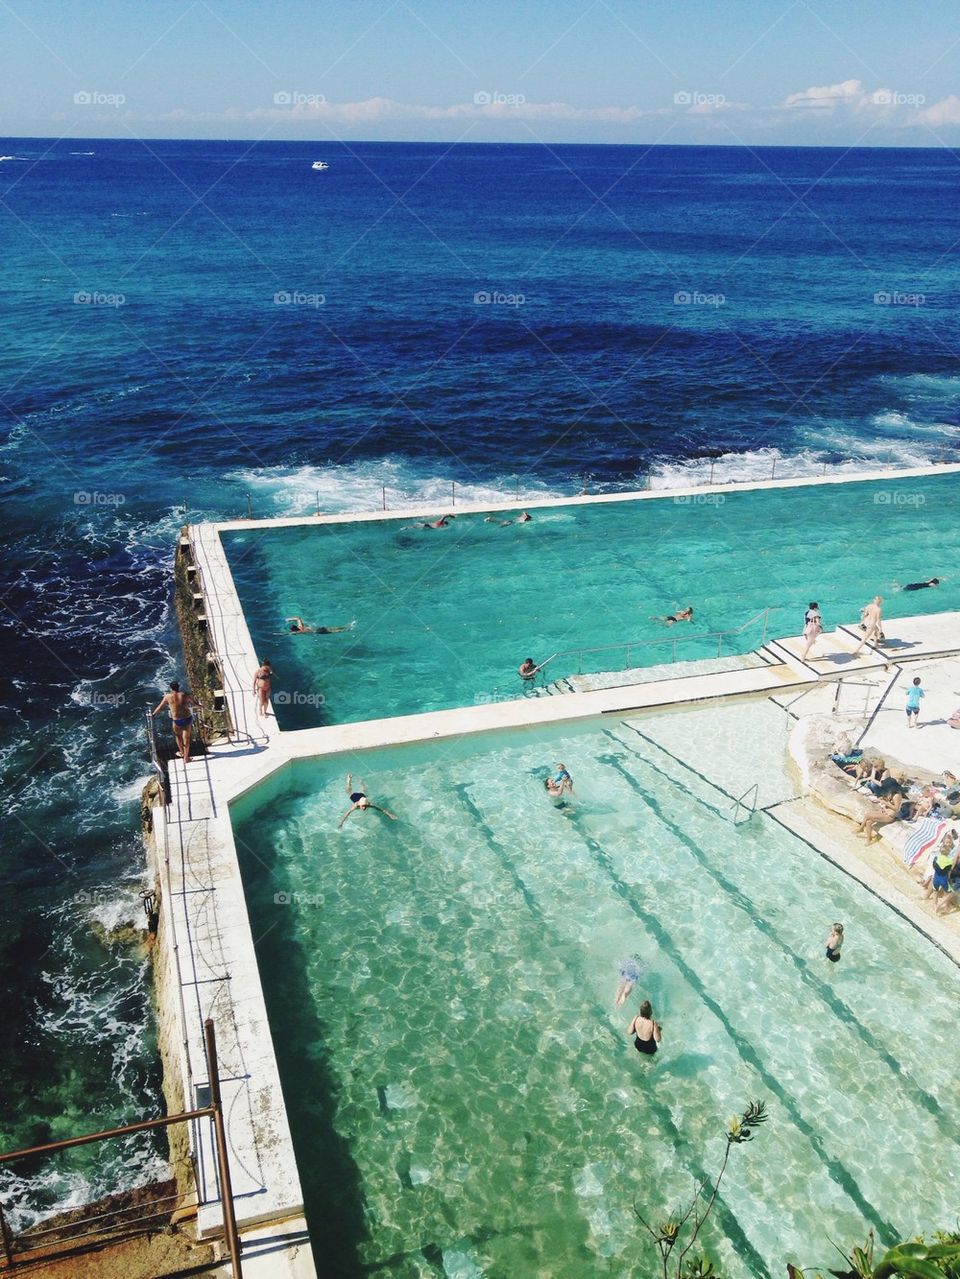 Bondi Beach Pool